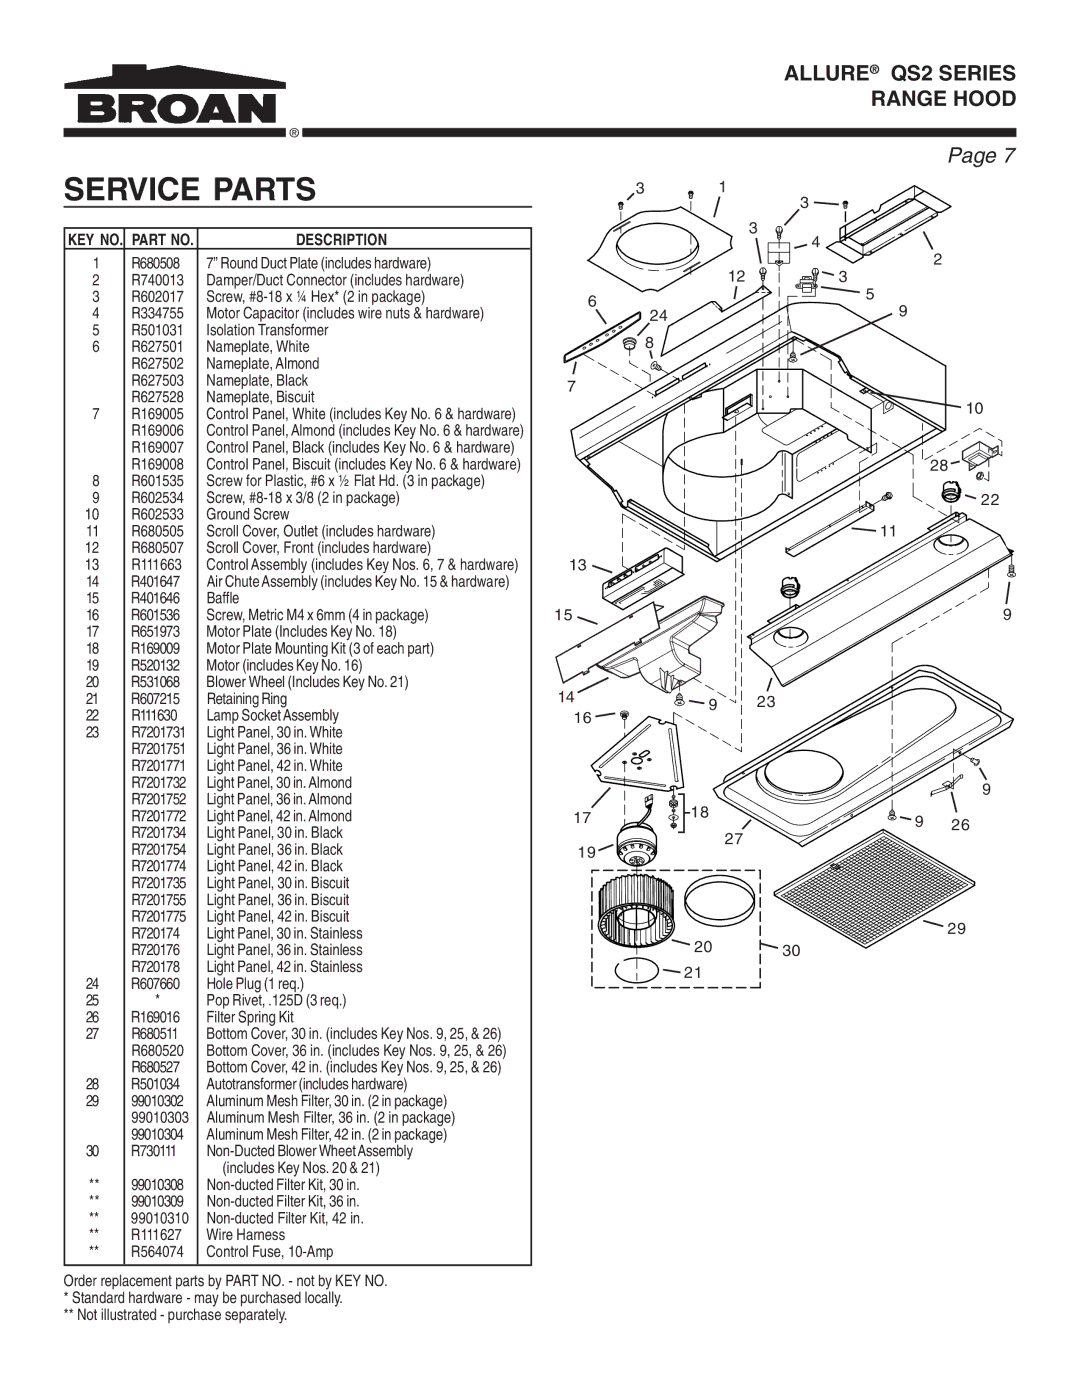 Broan QS2 warranty Service Parts, KEY NO. Part no 